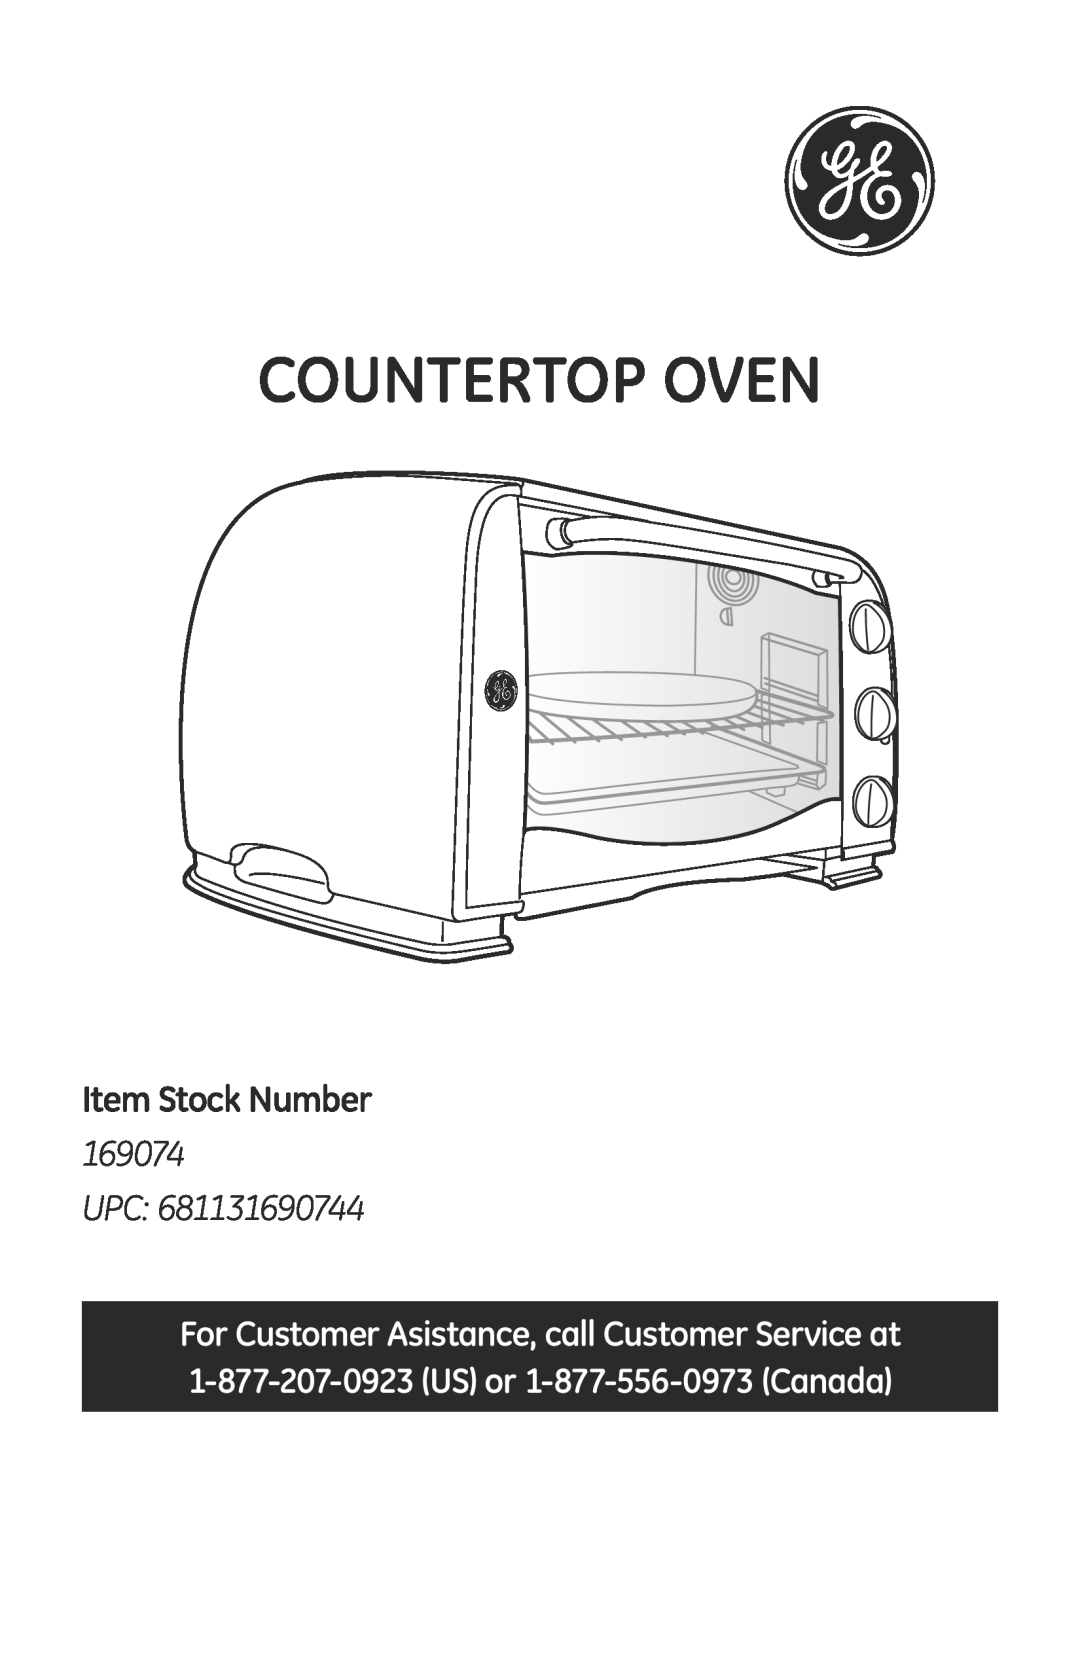 GE manual Countertop Oven, Item Stock Number, 169074 UPC 